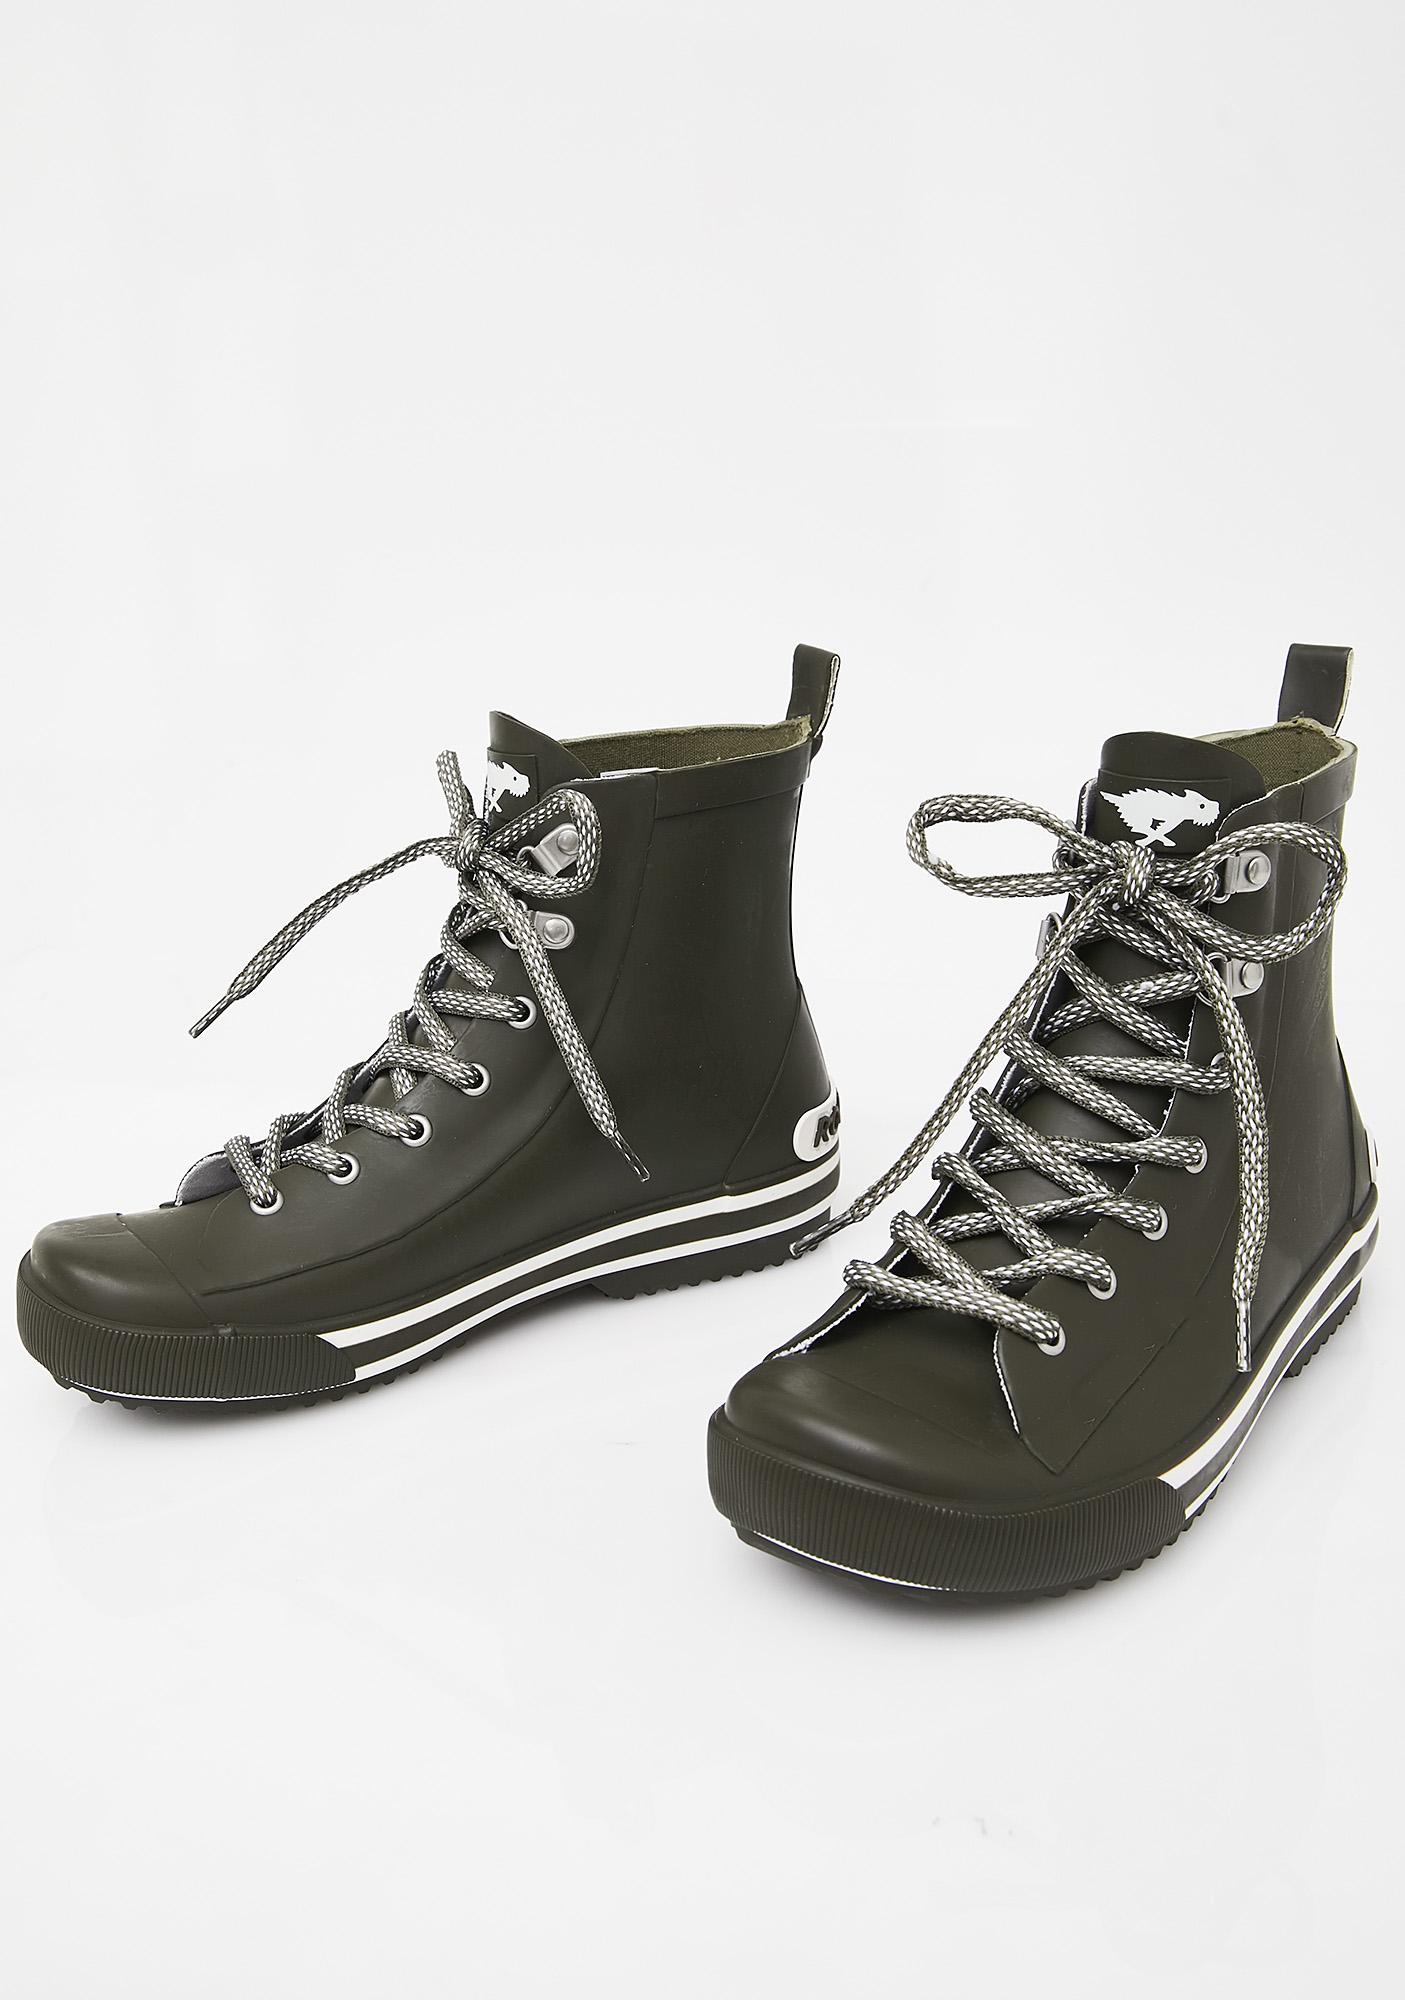 rocket dog rainy rubber boots